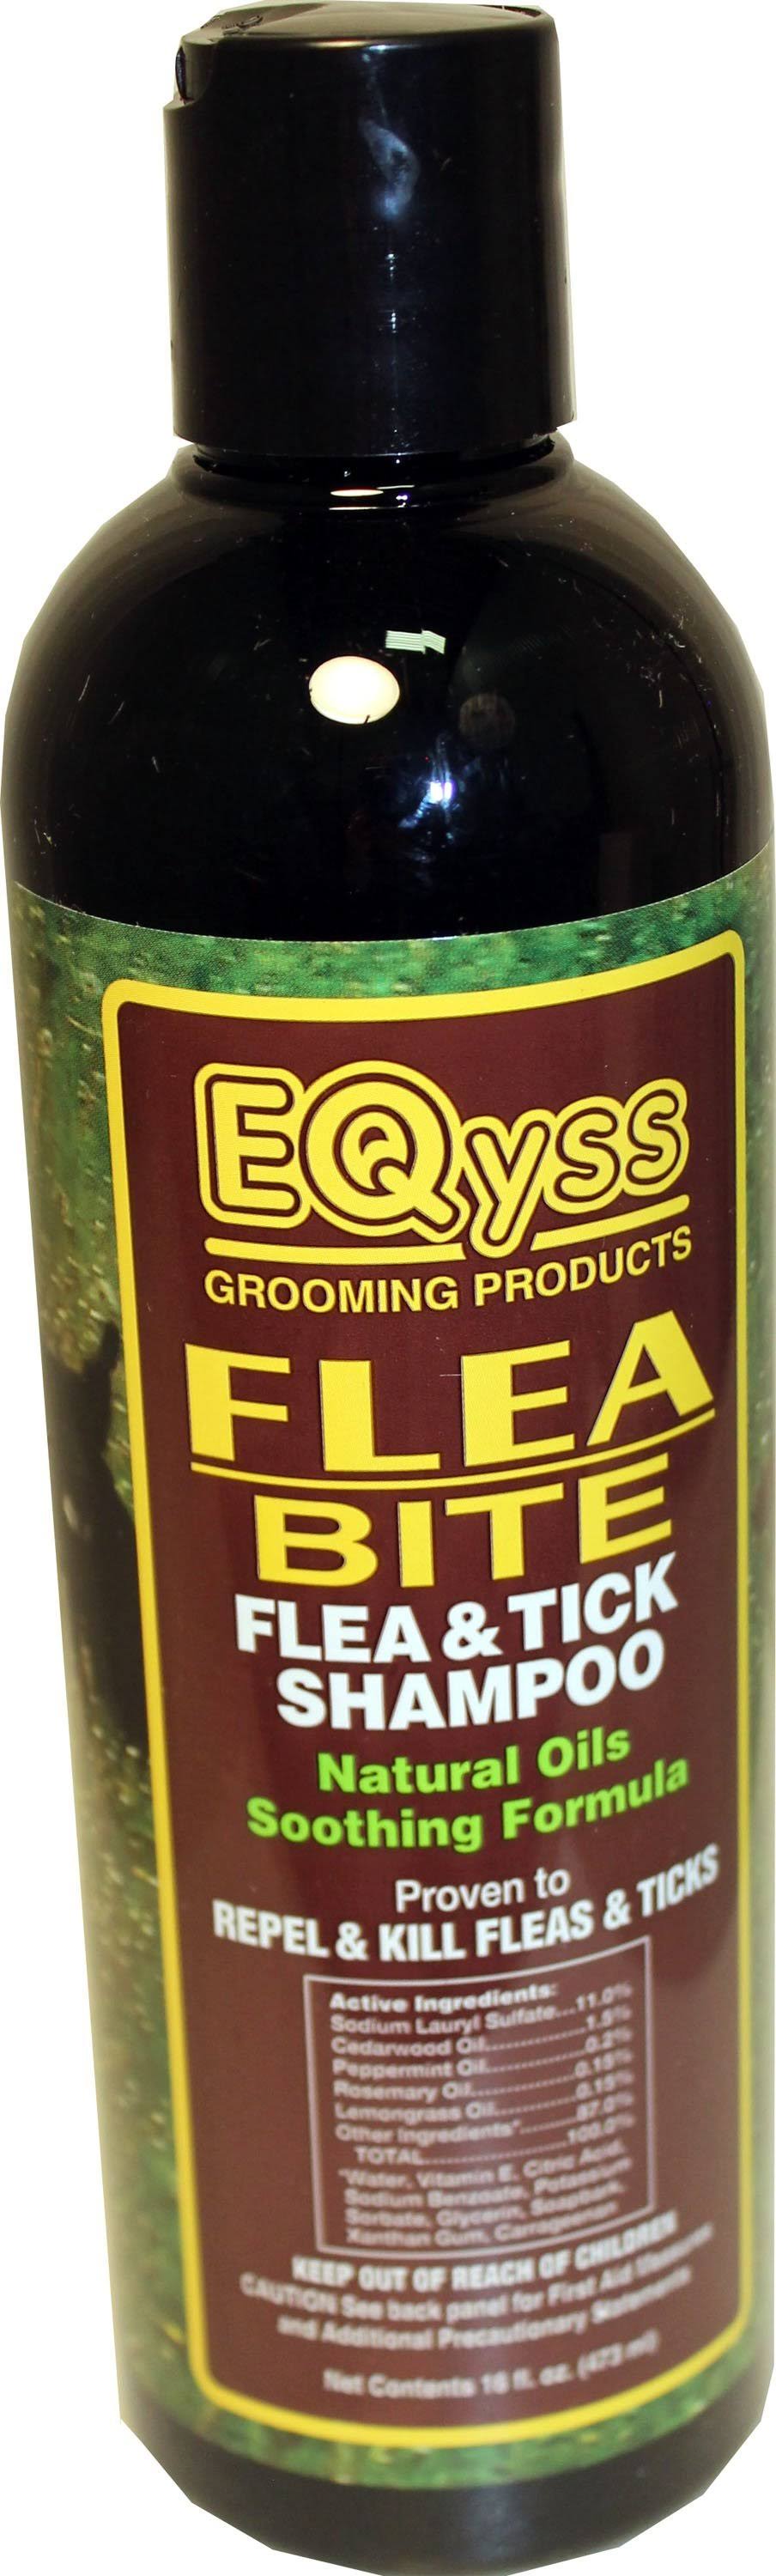 Eqyss Grooming Flea Bite Shampoo 16 oz